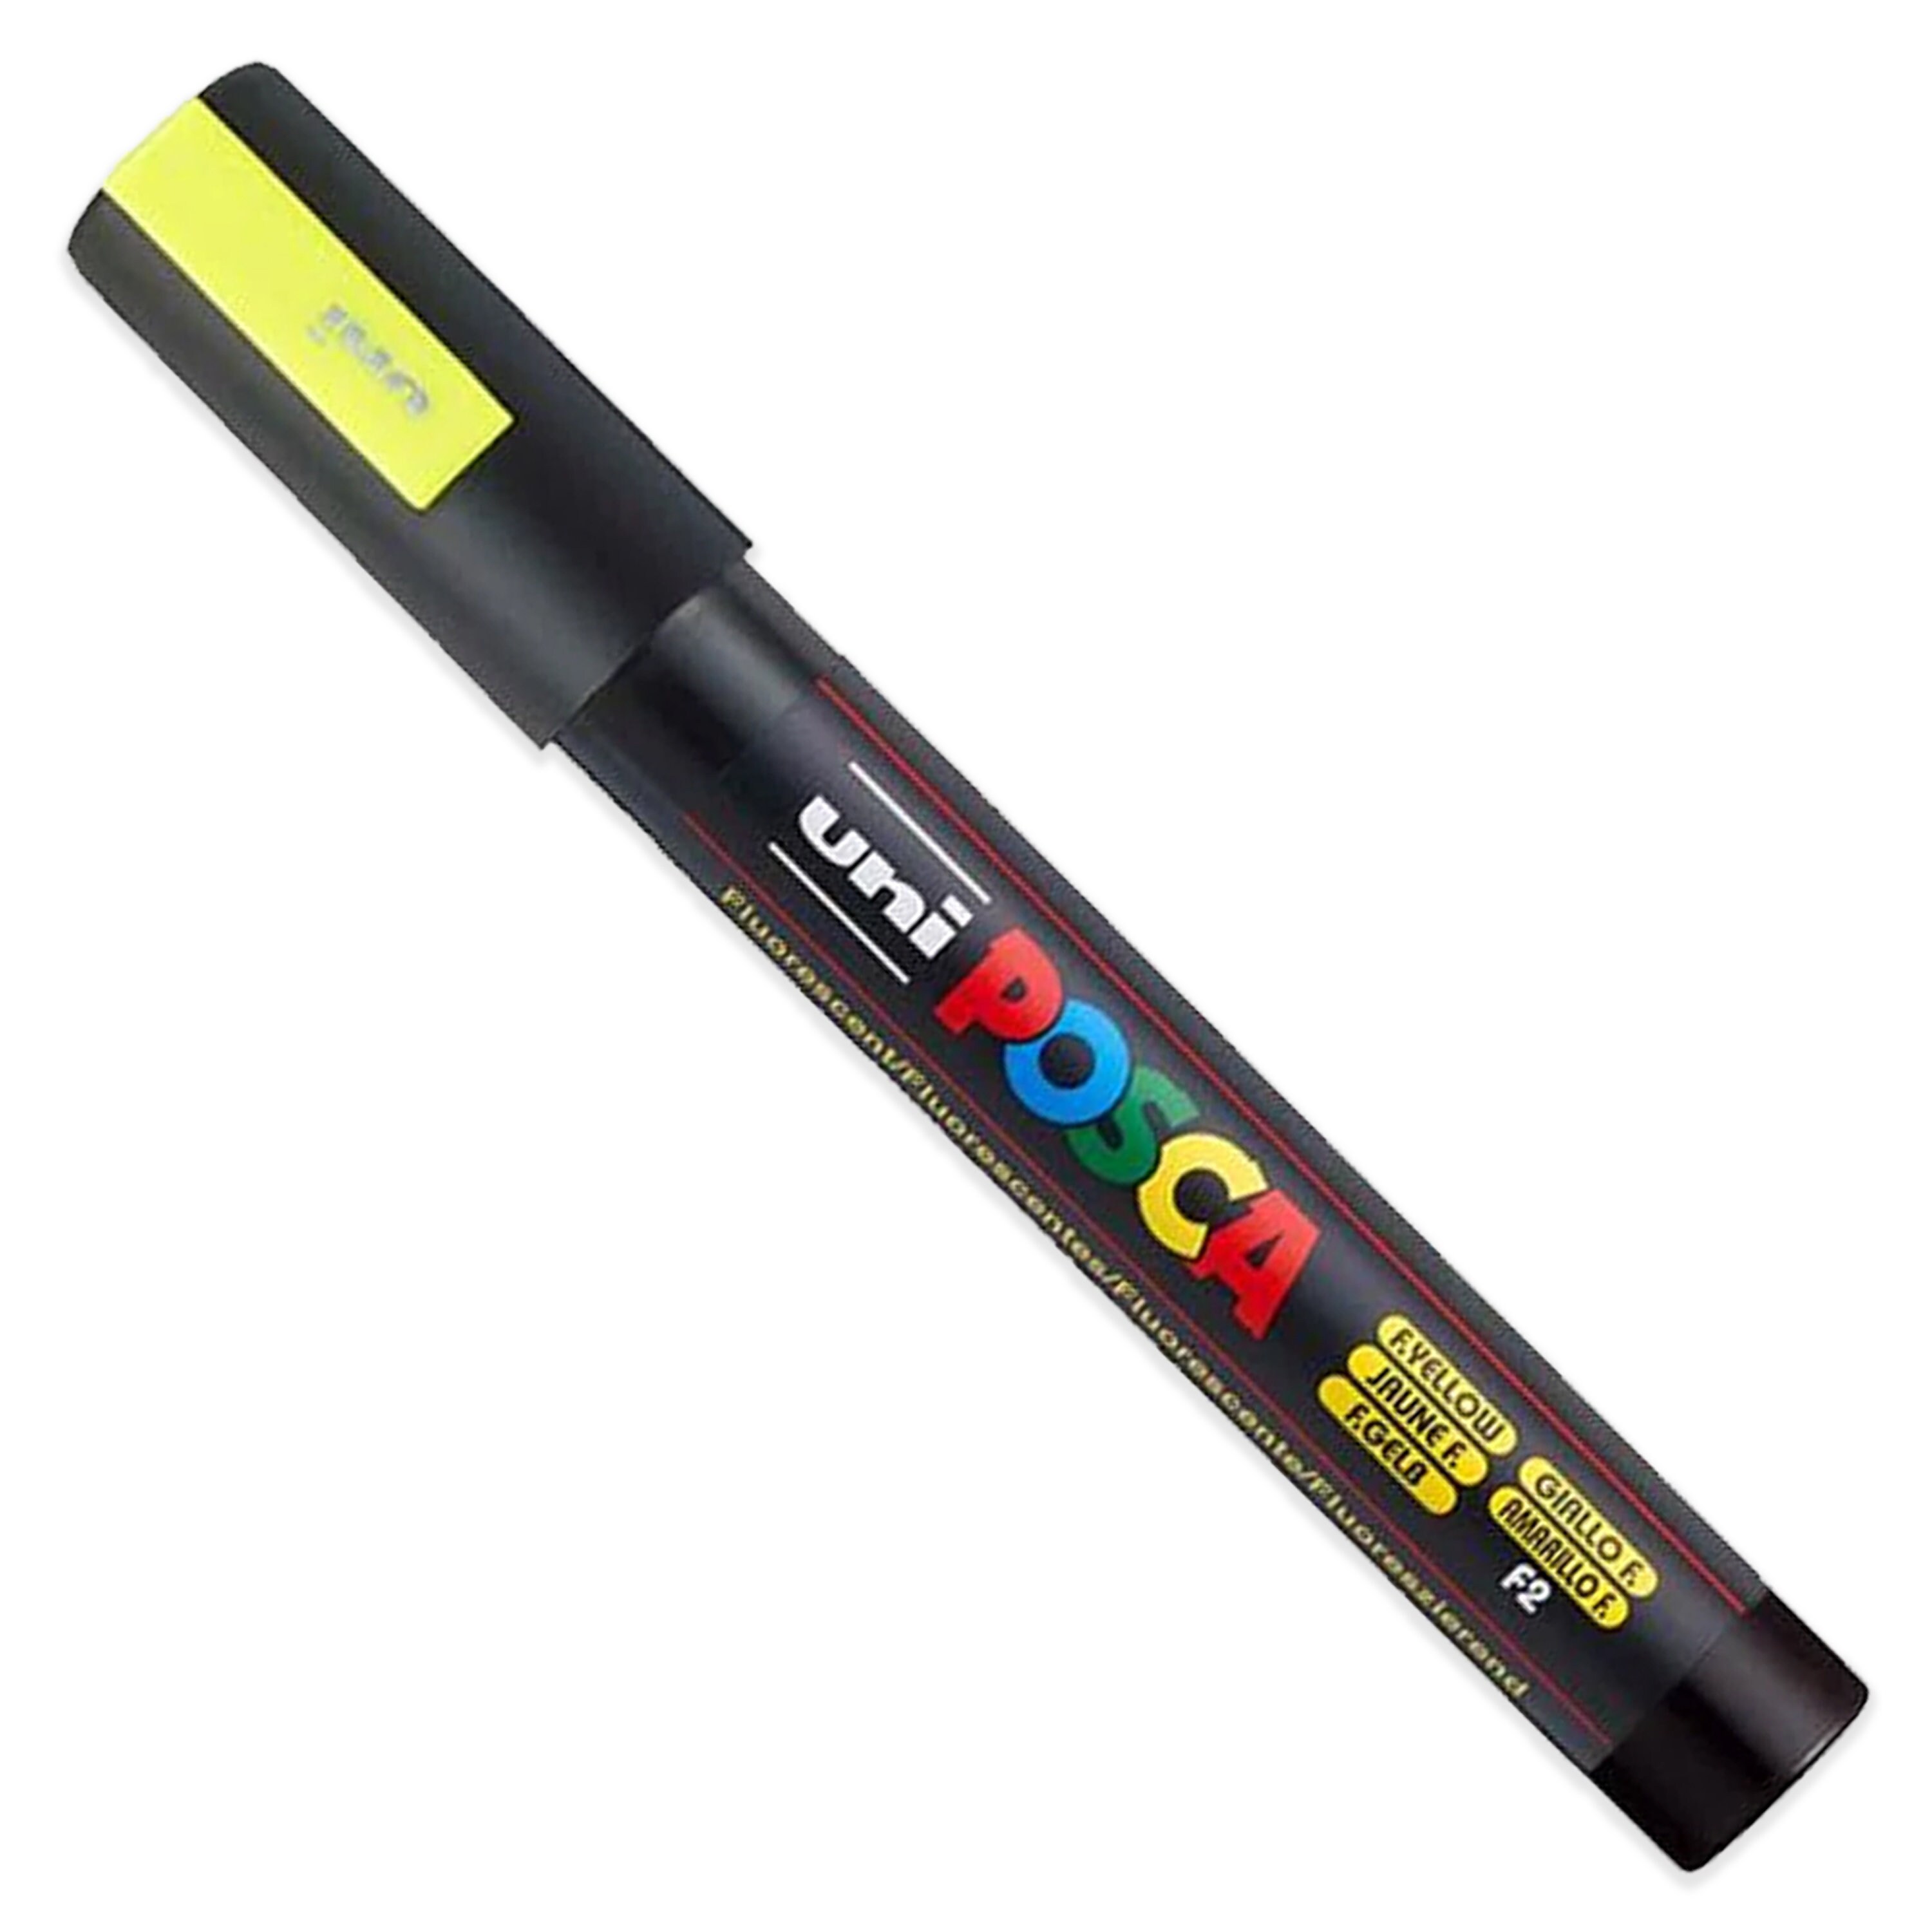 POSCA Marker PC-5M Fluorescent Yellow – MarkerPOP